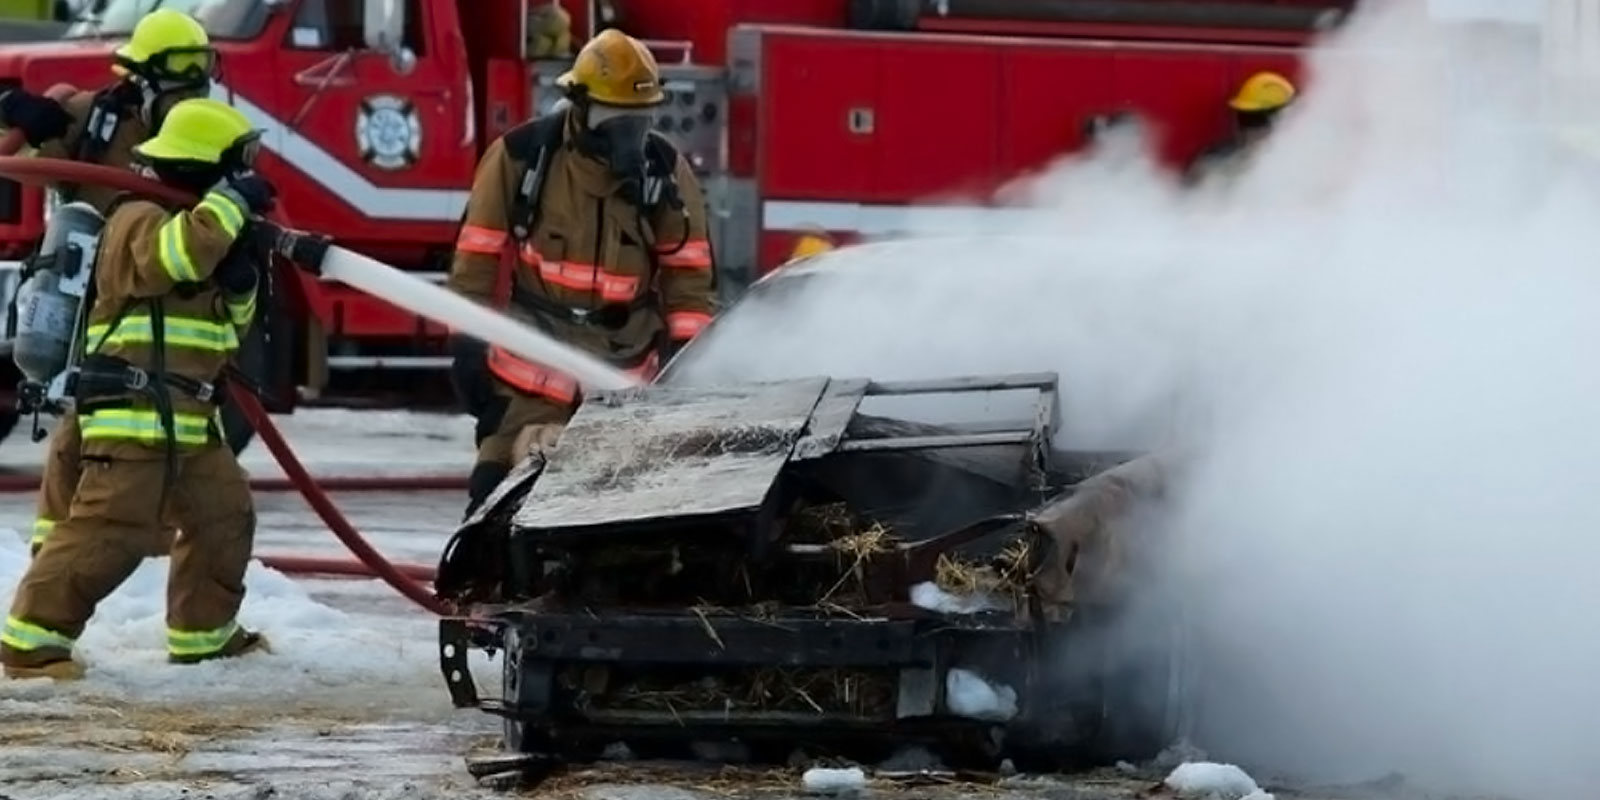 A Closer Look At Car Fire Burn Injuries